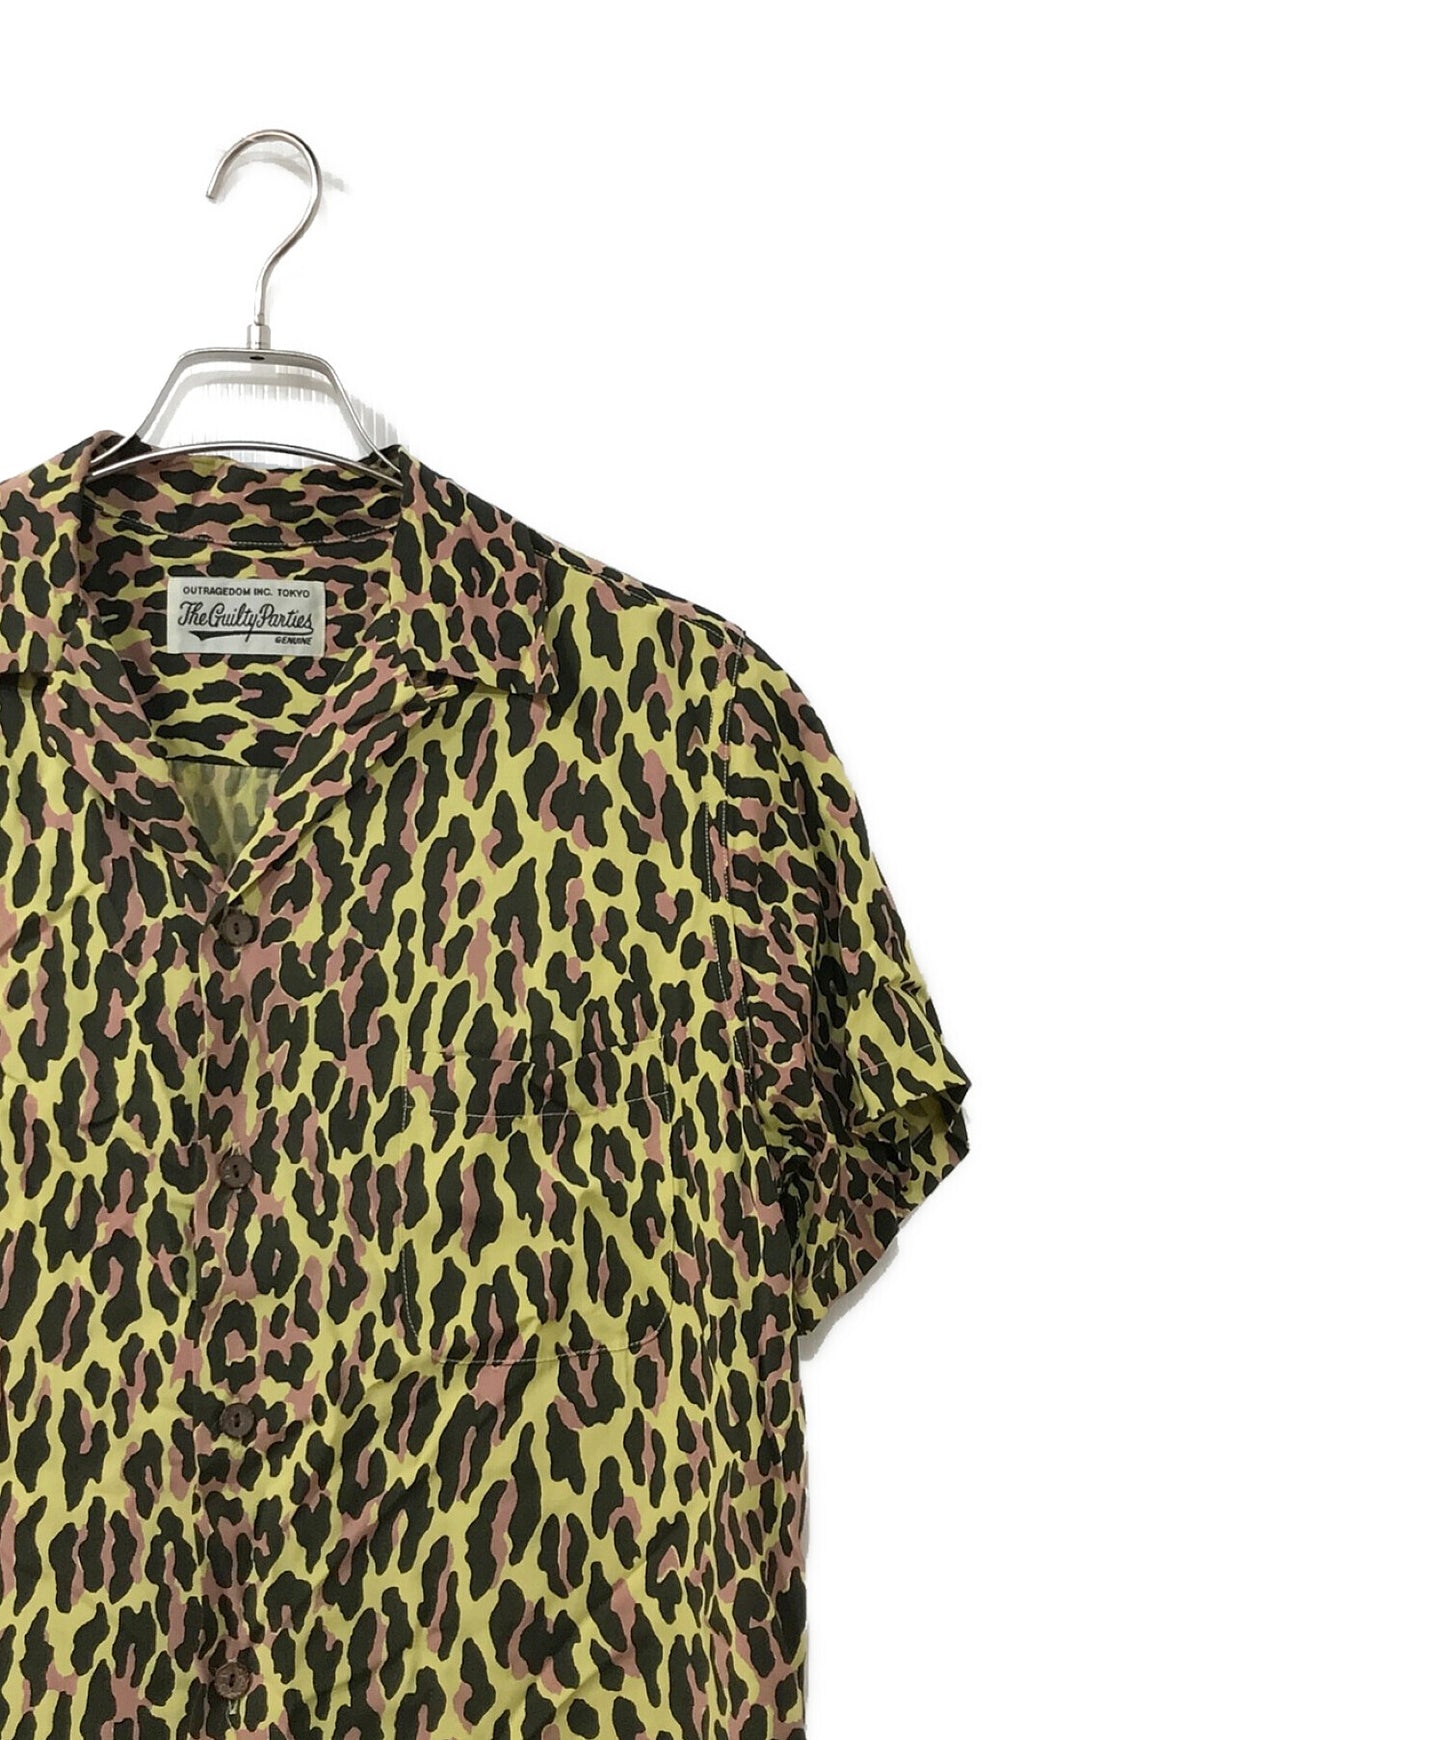 WACKO MARIA Leopard print rayon open collar shirt | Archive Factory